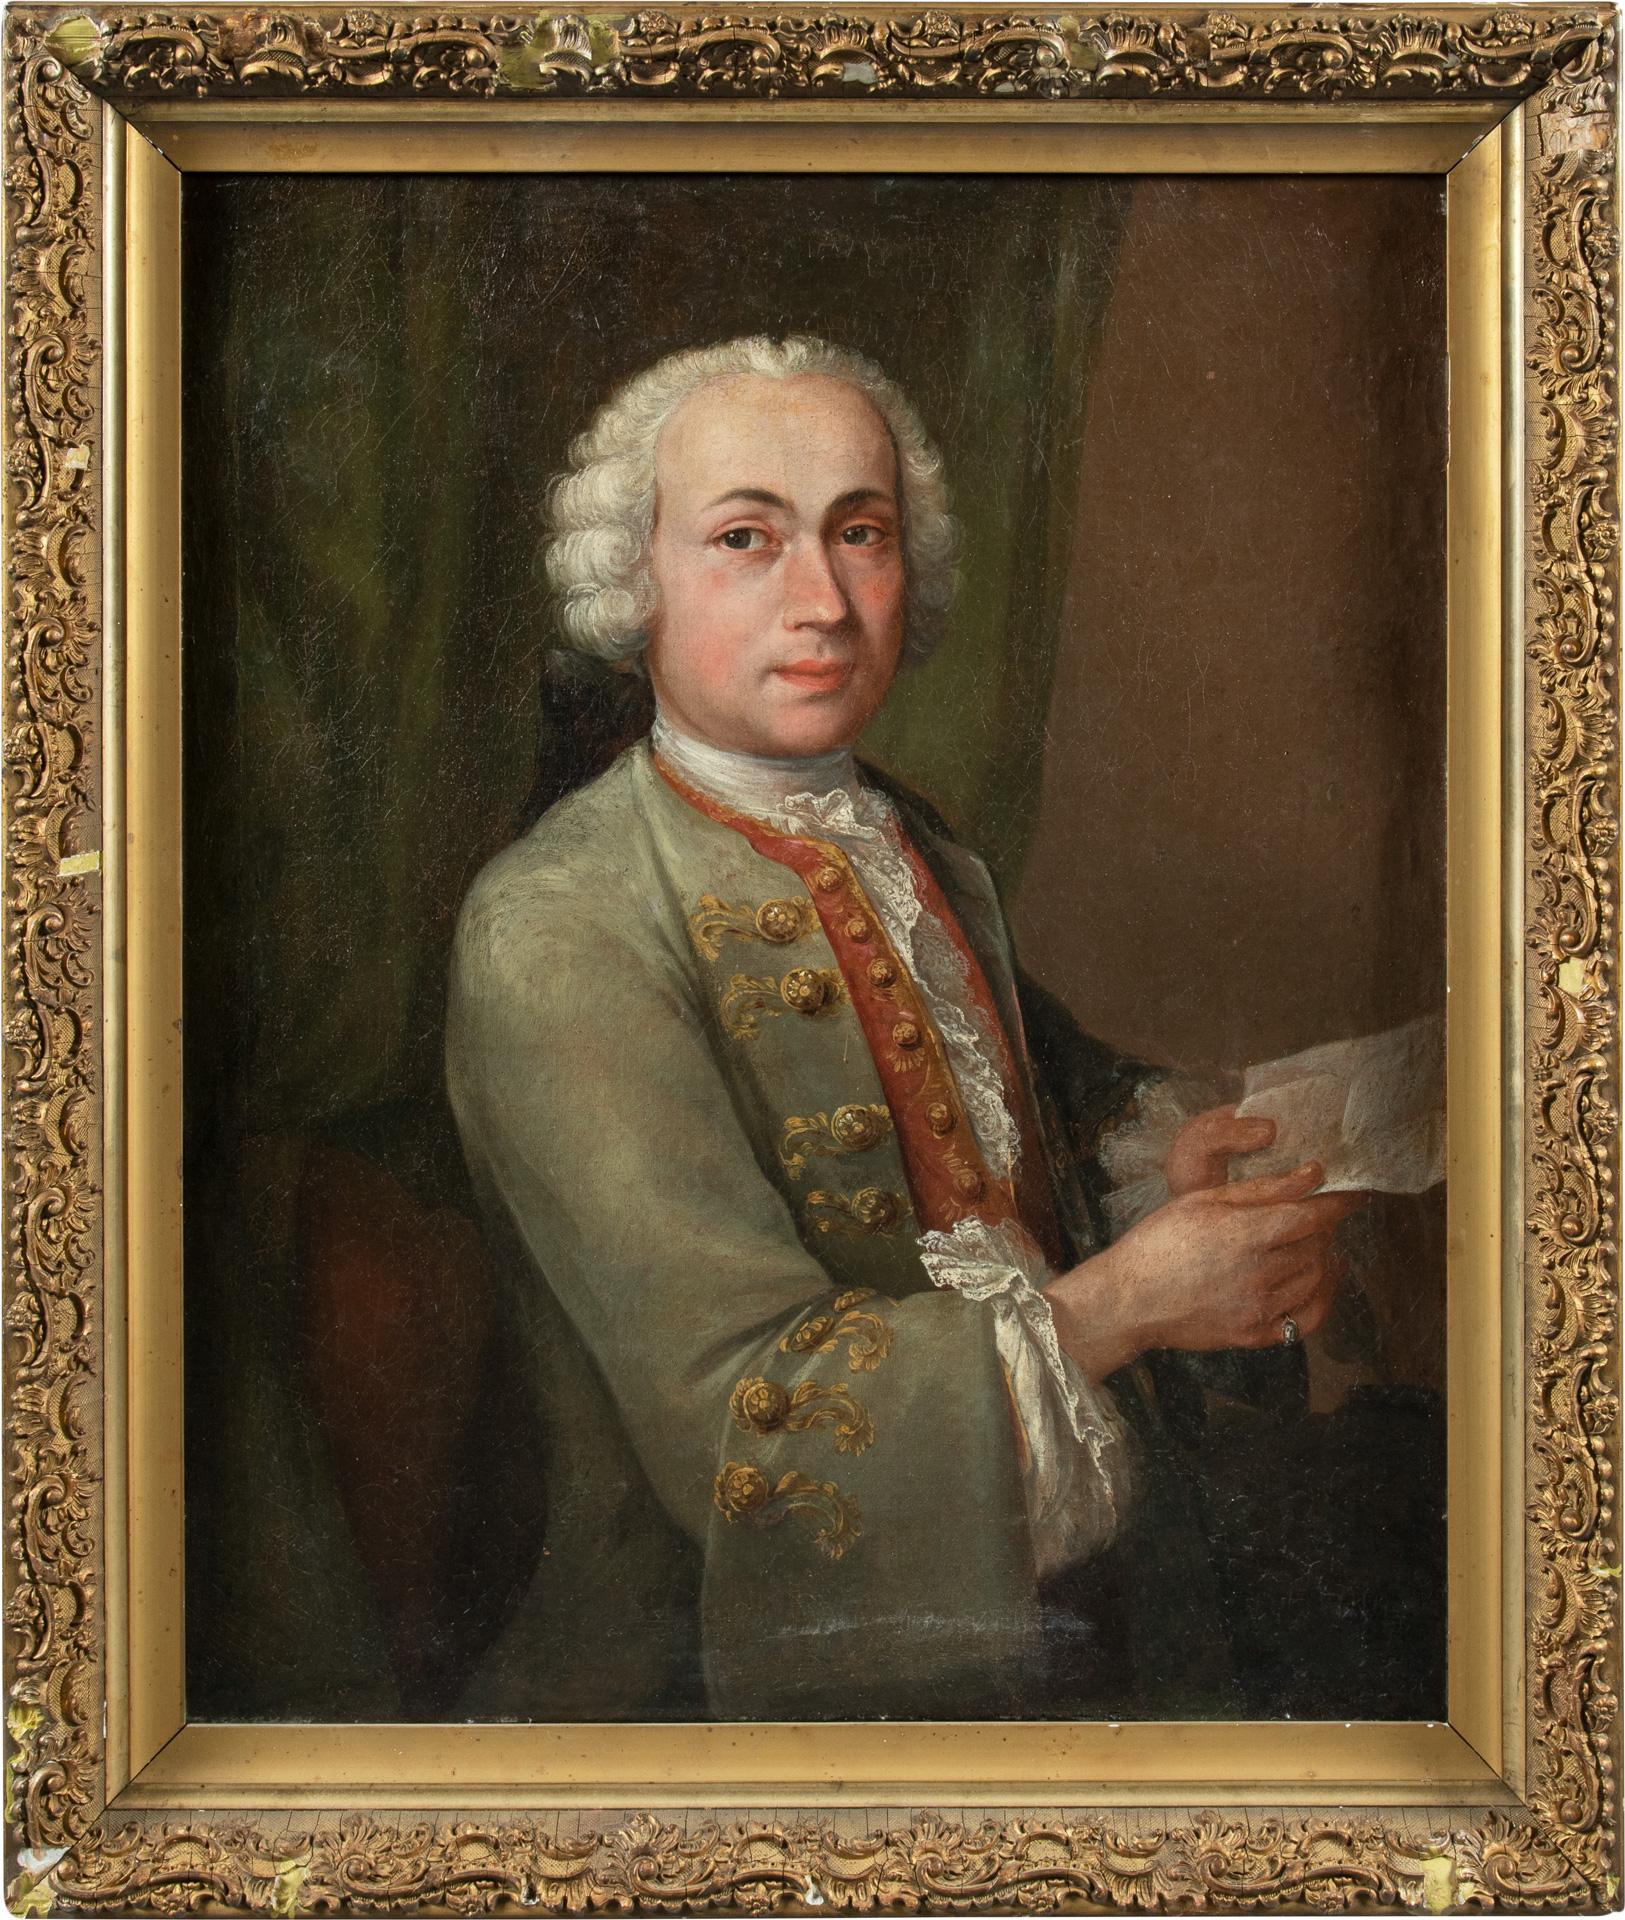 18th century Italian figure painting - Portrait nobleman - Oil on canvas Italy